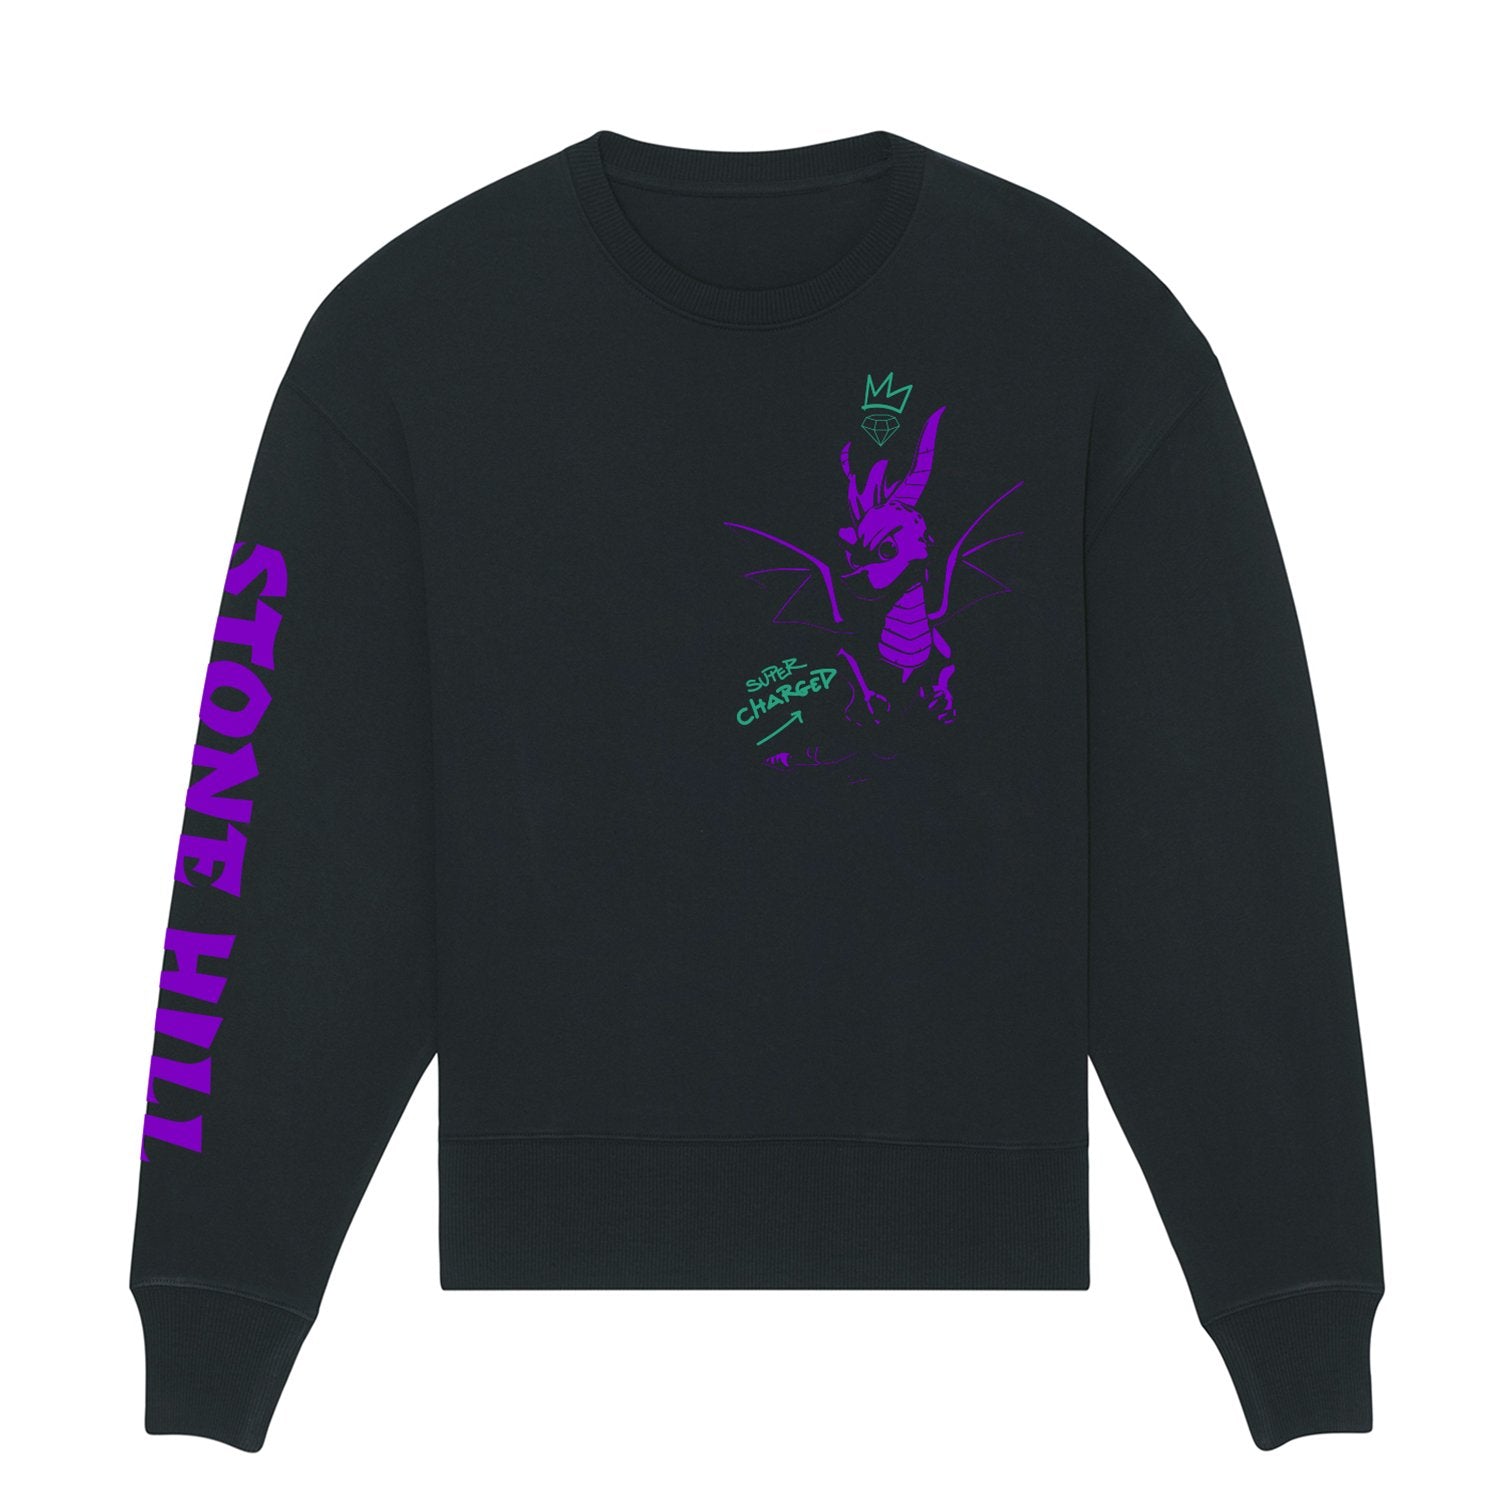 Spyro Stone Hill Sweatshirt, Black Unisex Crew Neck